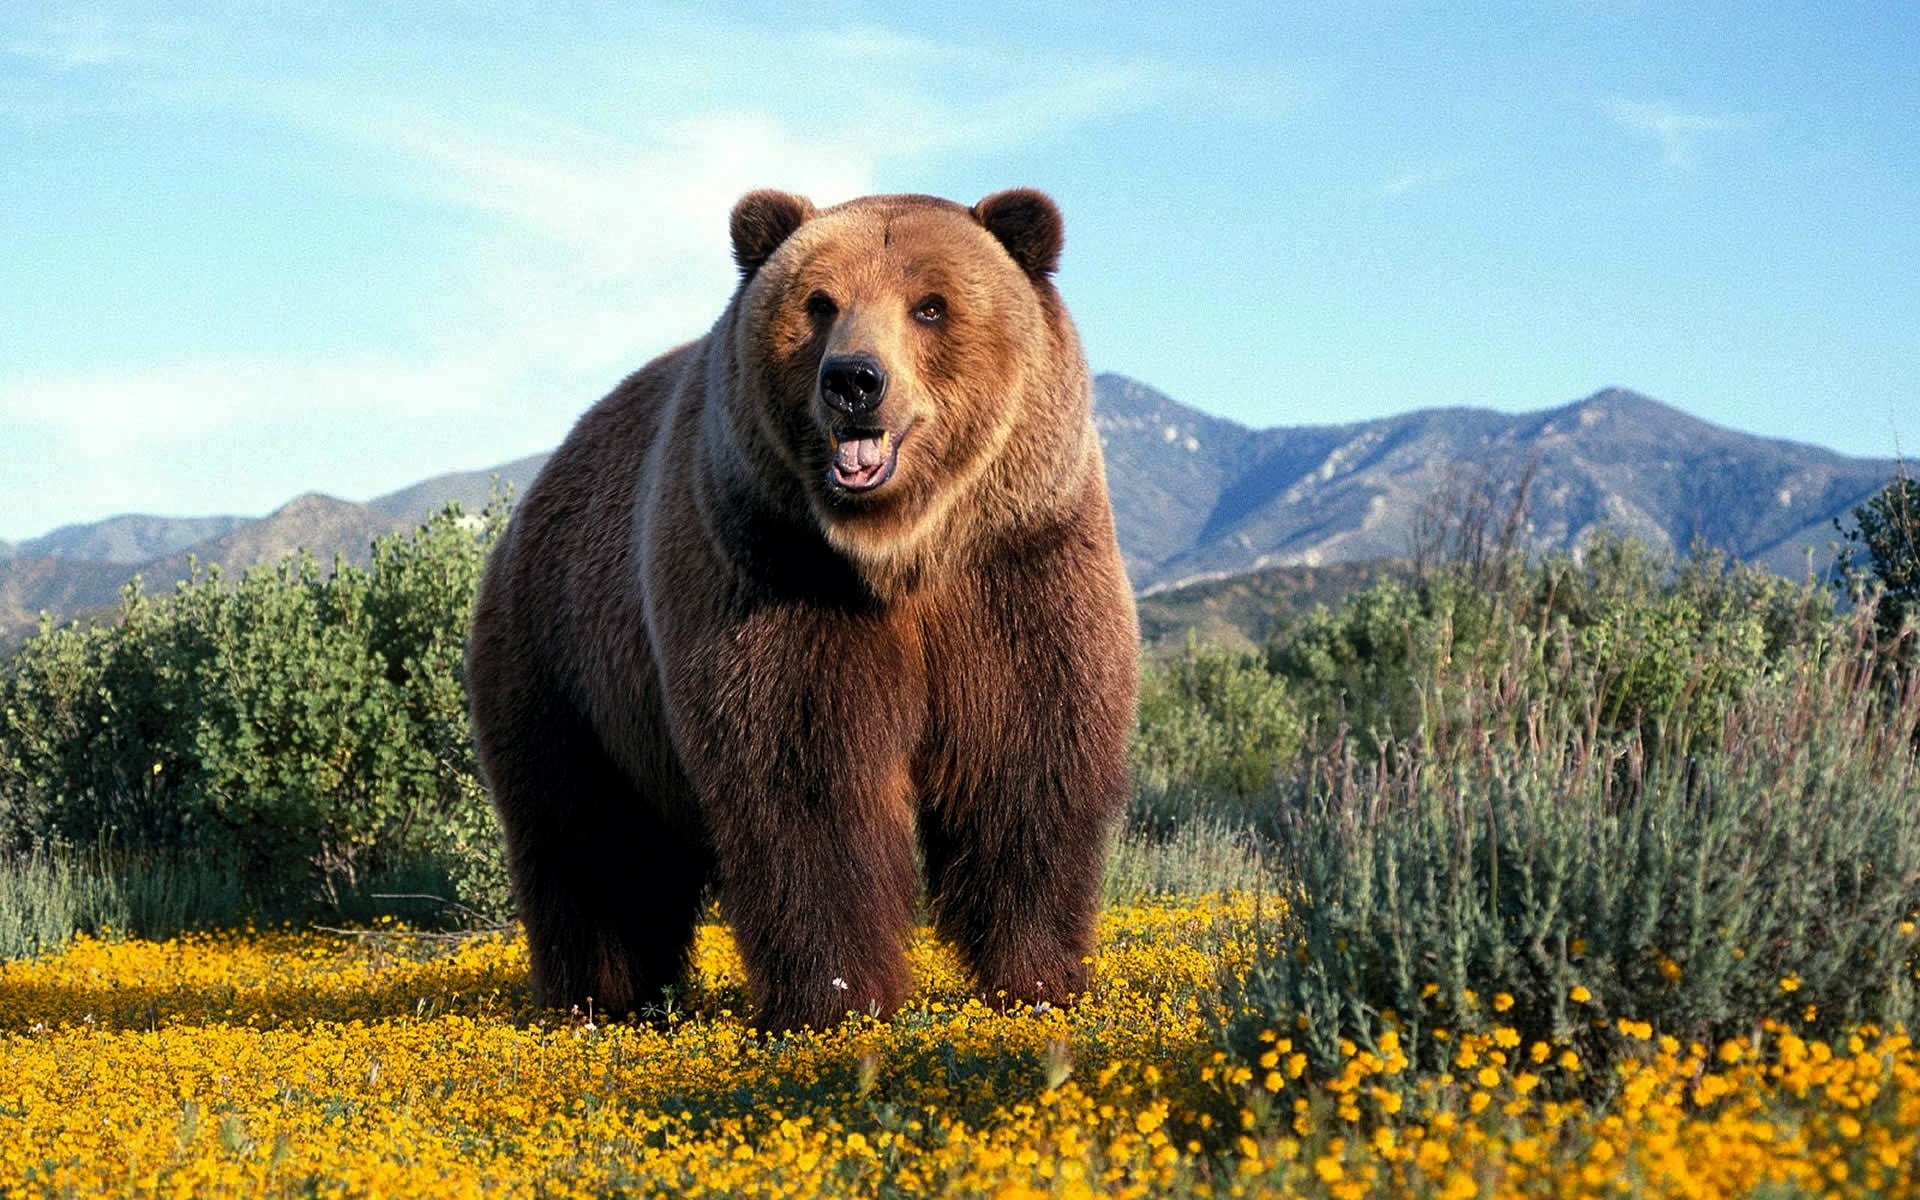 Bears: Amazing Big Wild Bear Grizzly Wallpaper Image HD 16:9 High ...